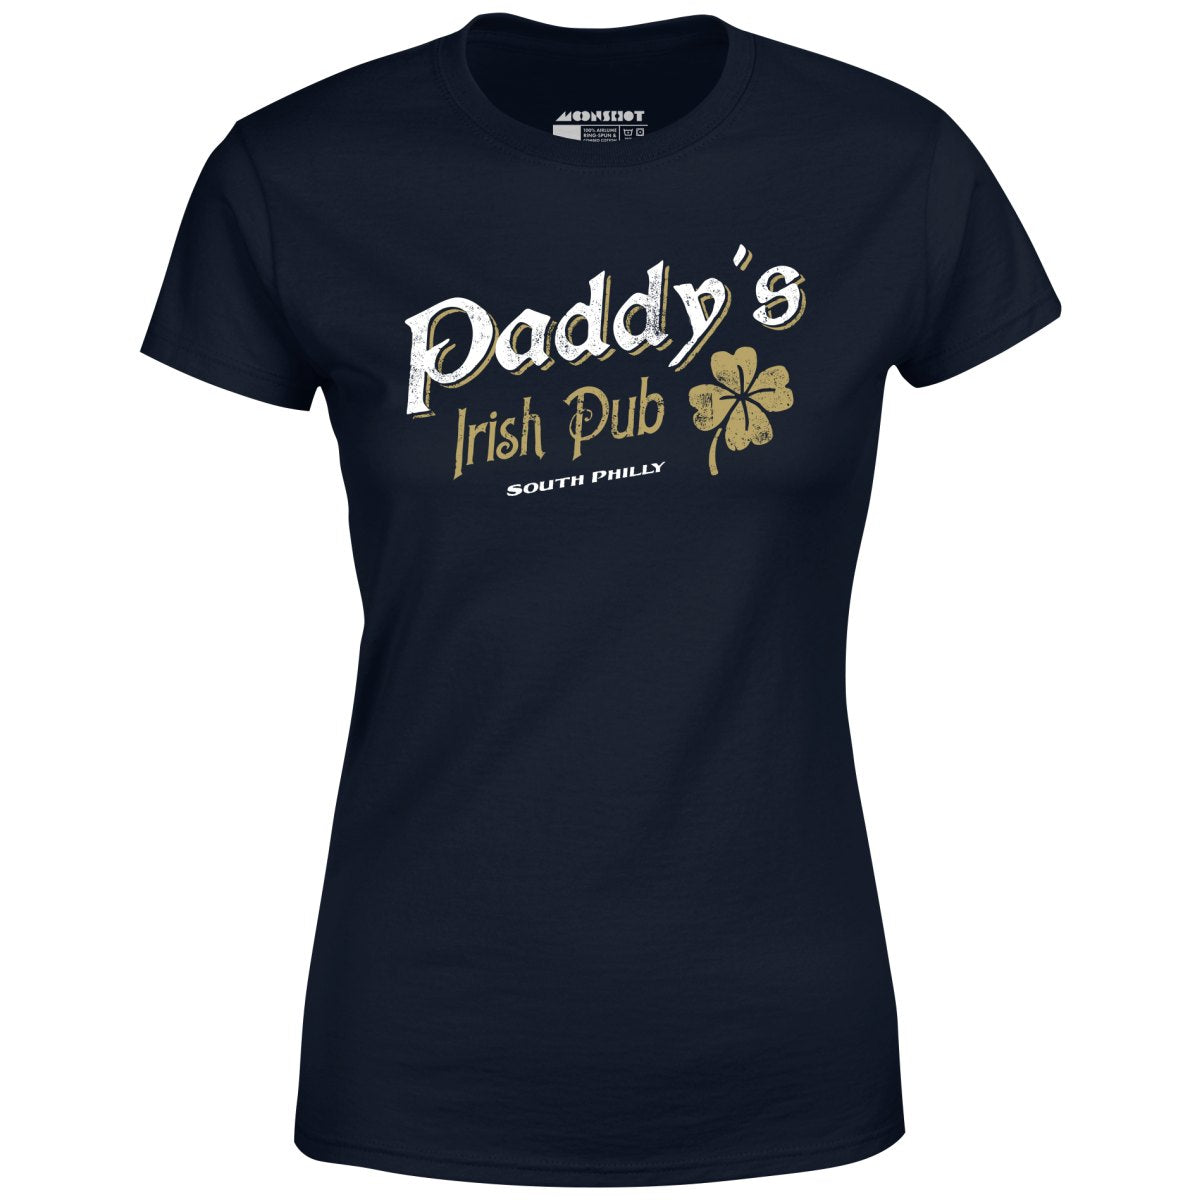 Paddy's Irish Pub - Women's T-Shirt